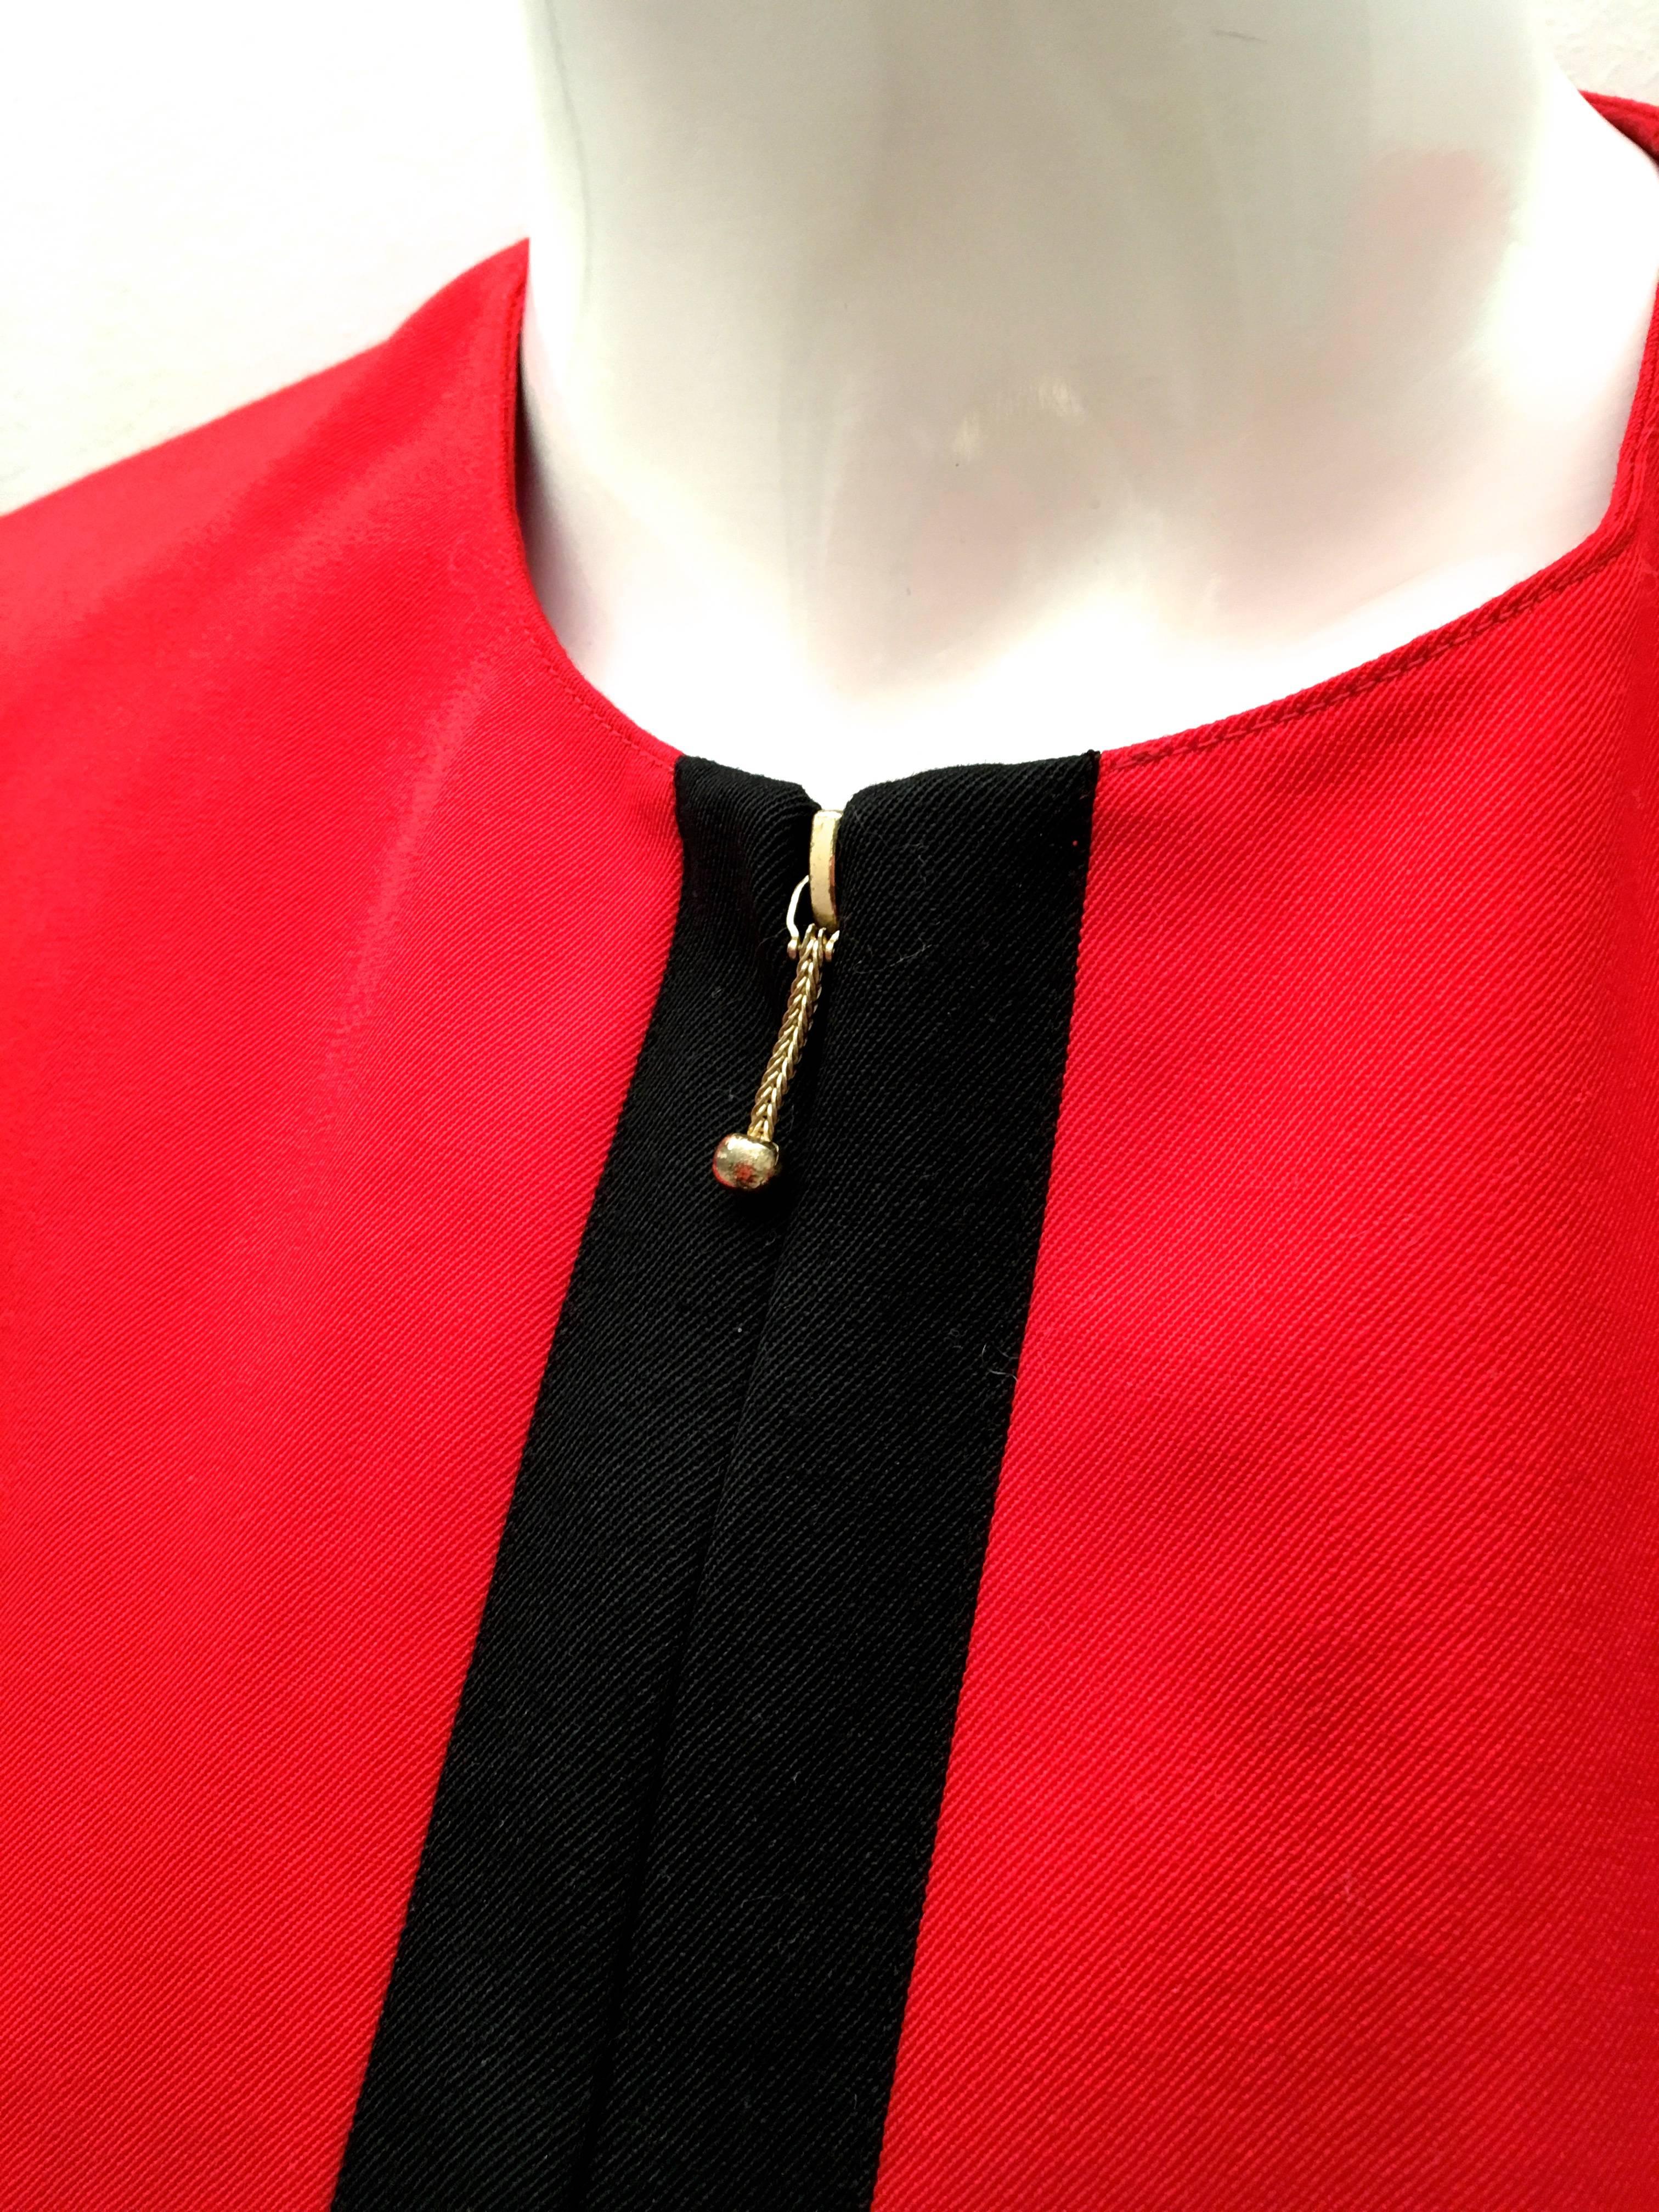 Lolita Lempicka Red Zip-Up Jacket with Black Trim For Sale 1